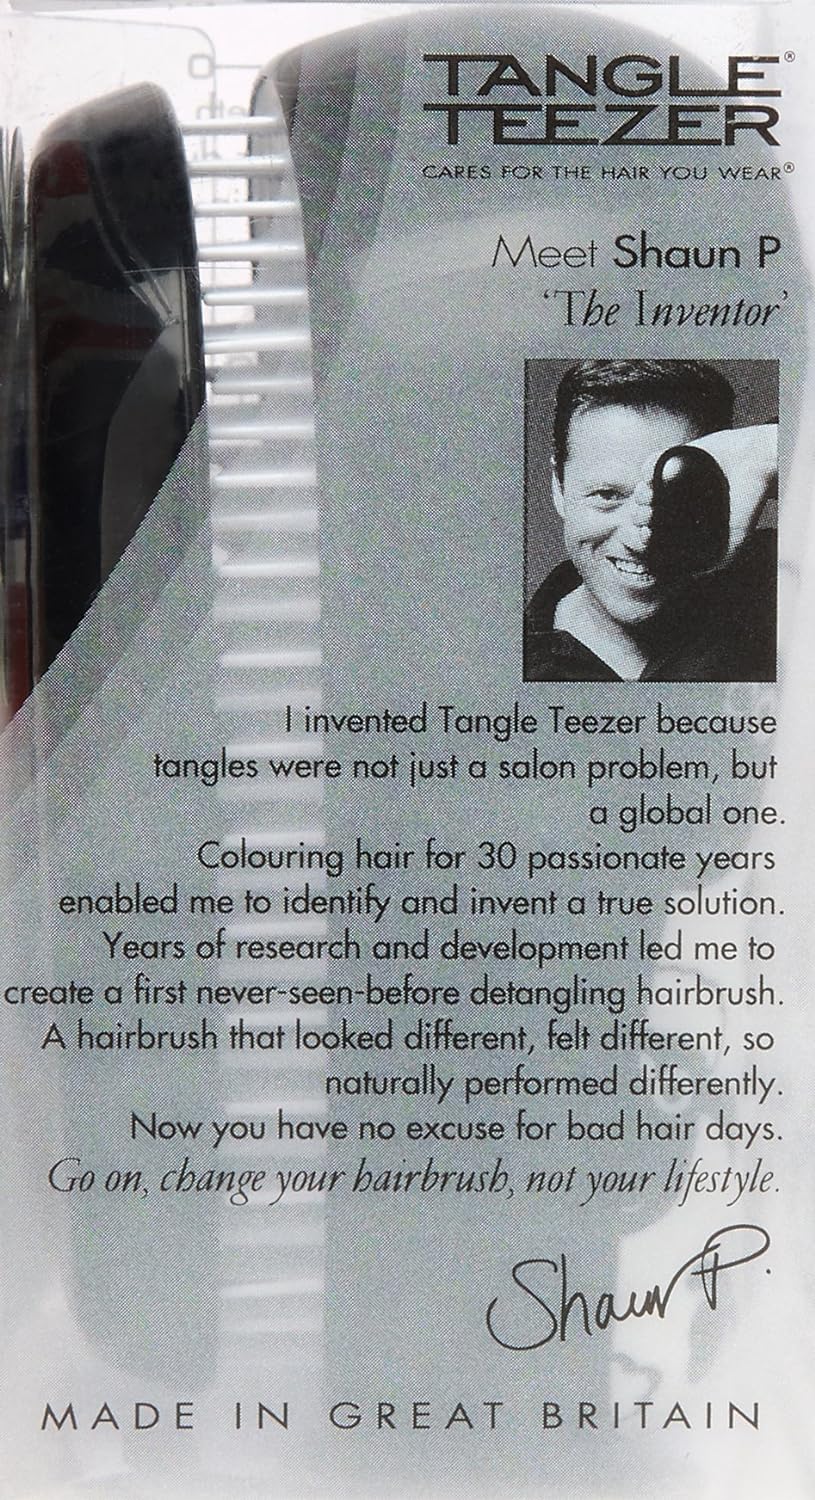 Tangle Teezer The Fine and Fragile Detangling Brush, Dry and Wet Hair Brush Detangler for Color-Treated, Fine and Fragile Hair, Mint Violet